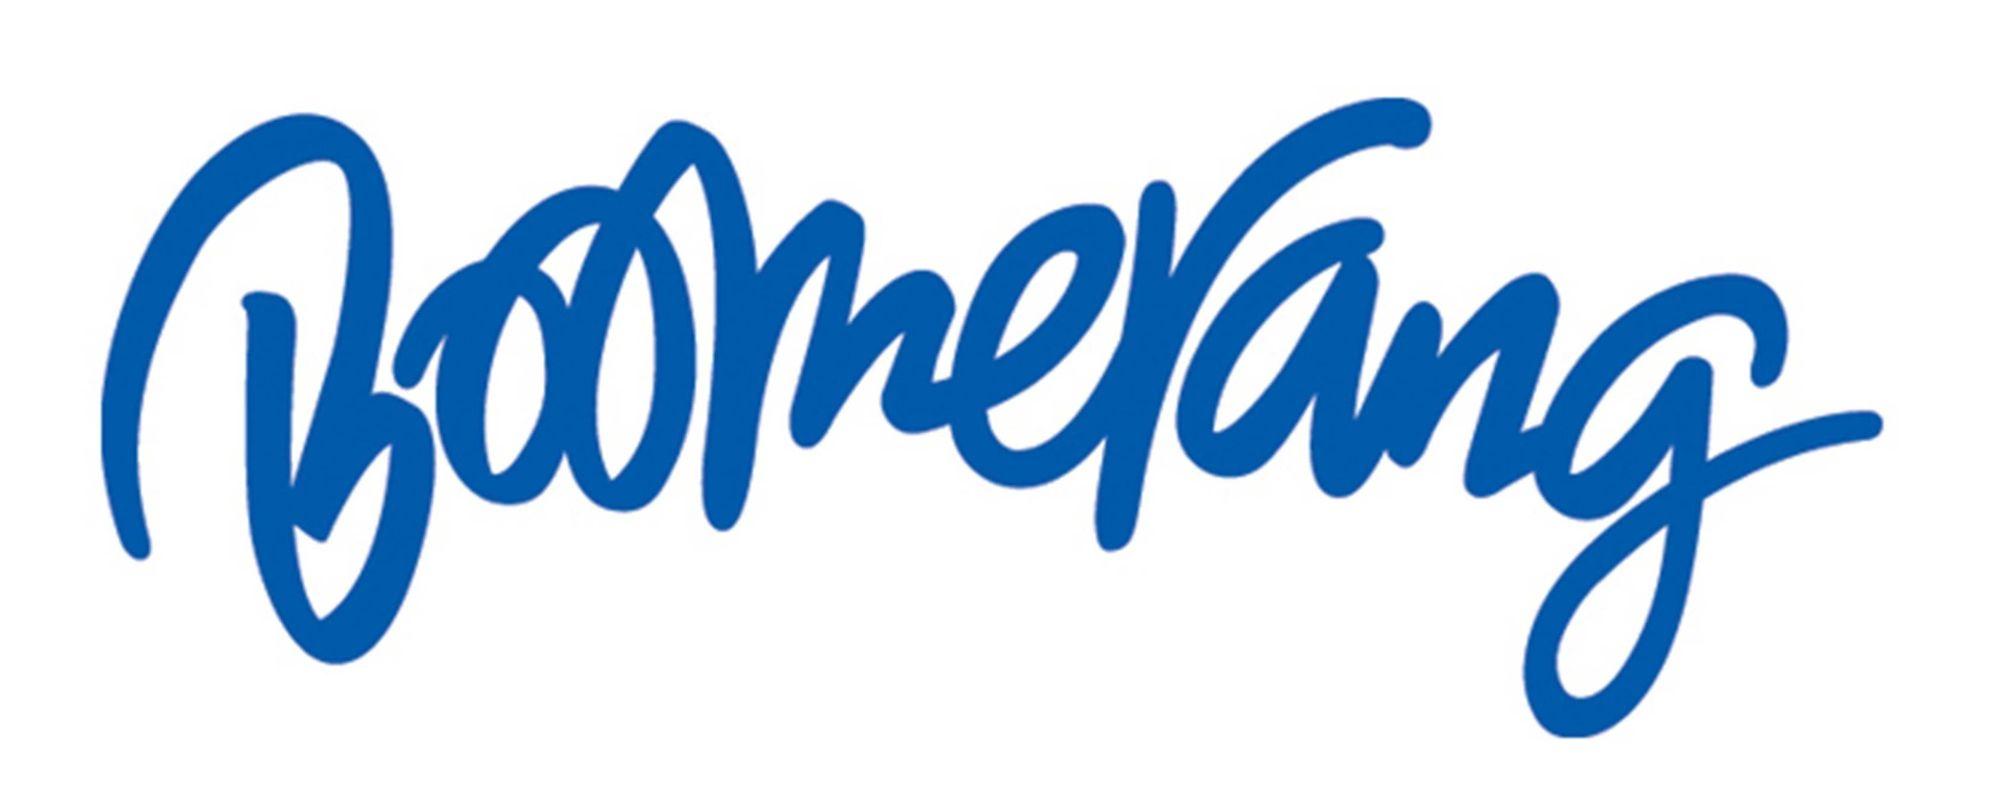 Old Boomerang TV Logo - Boomerang (TV Channel) | Boomerpedia | FANDOM powered by Wikia